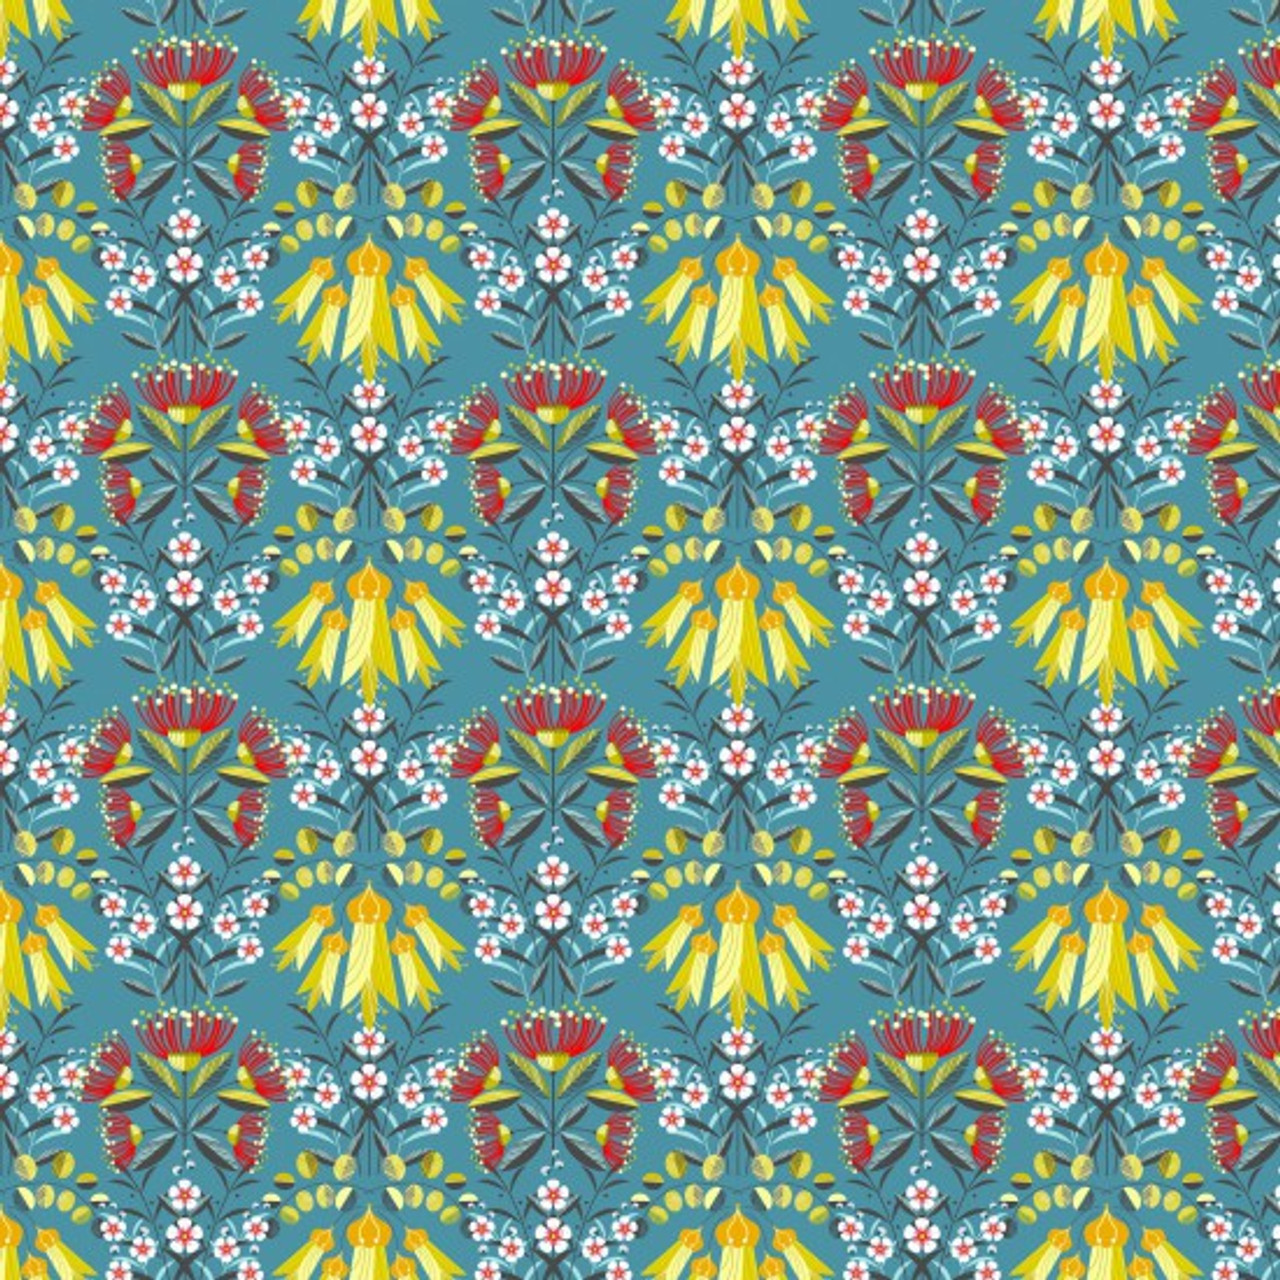 NATIVE BLOOM -FLOWERS 100% Cotton Fabric -112cm/44in wide, Sold Per HALF Metre